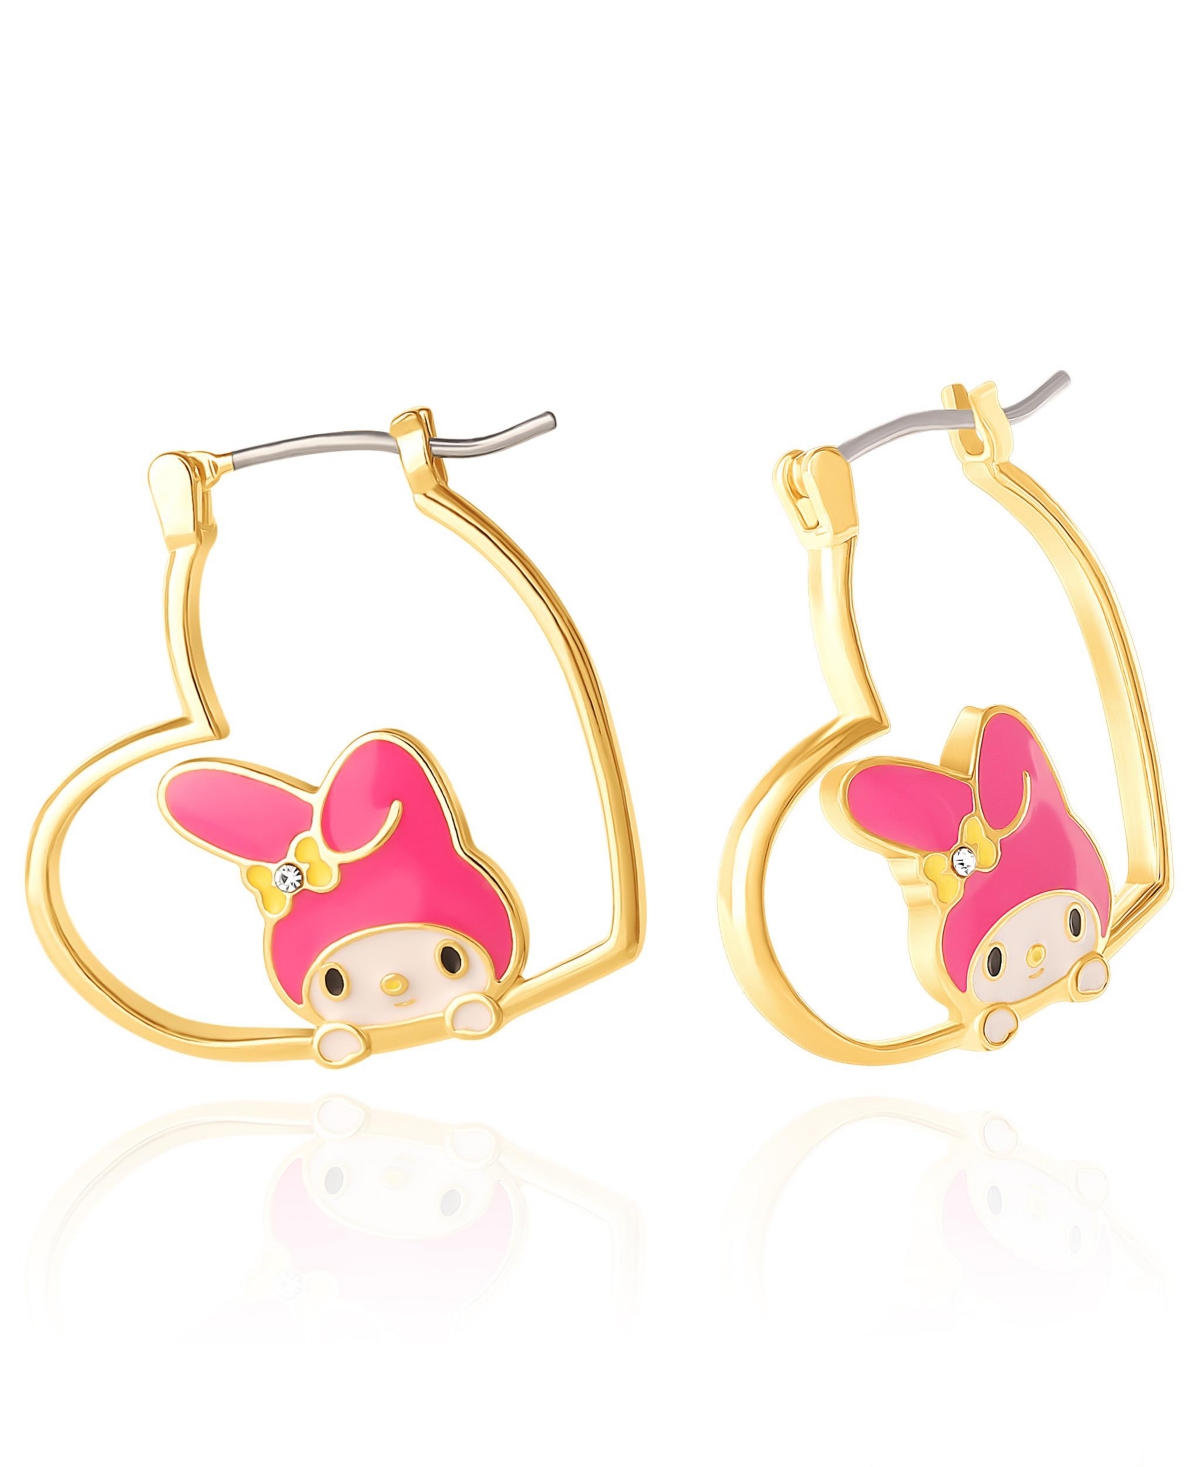 Sanrio My Melody Heart Hoop Earrings - Gold tone, pink